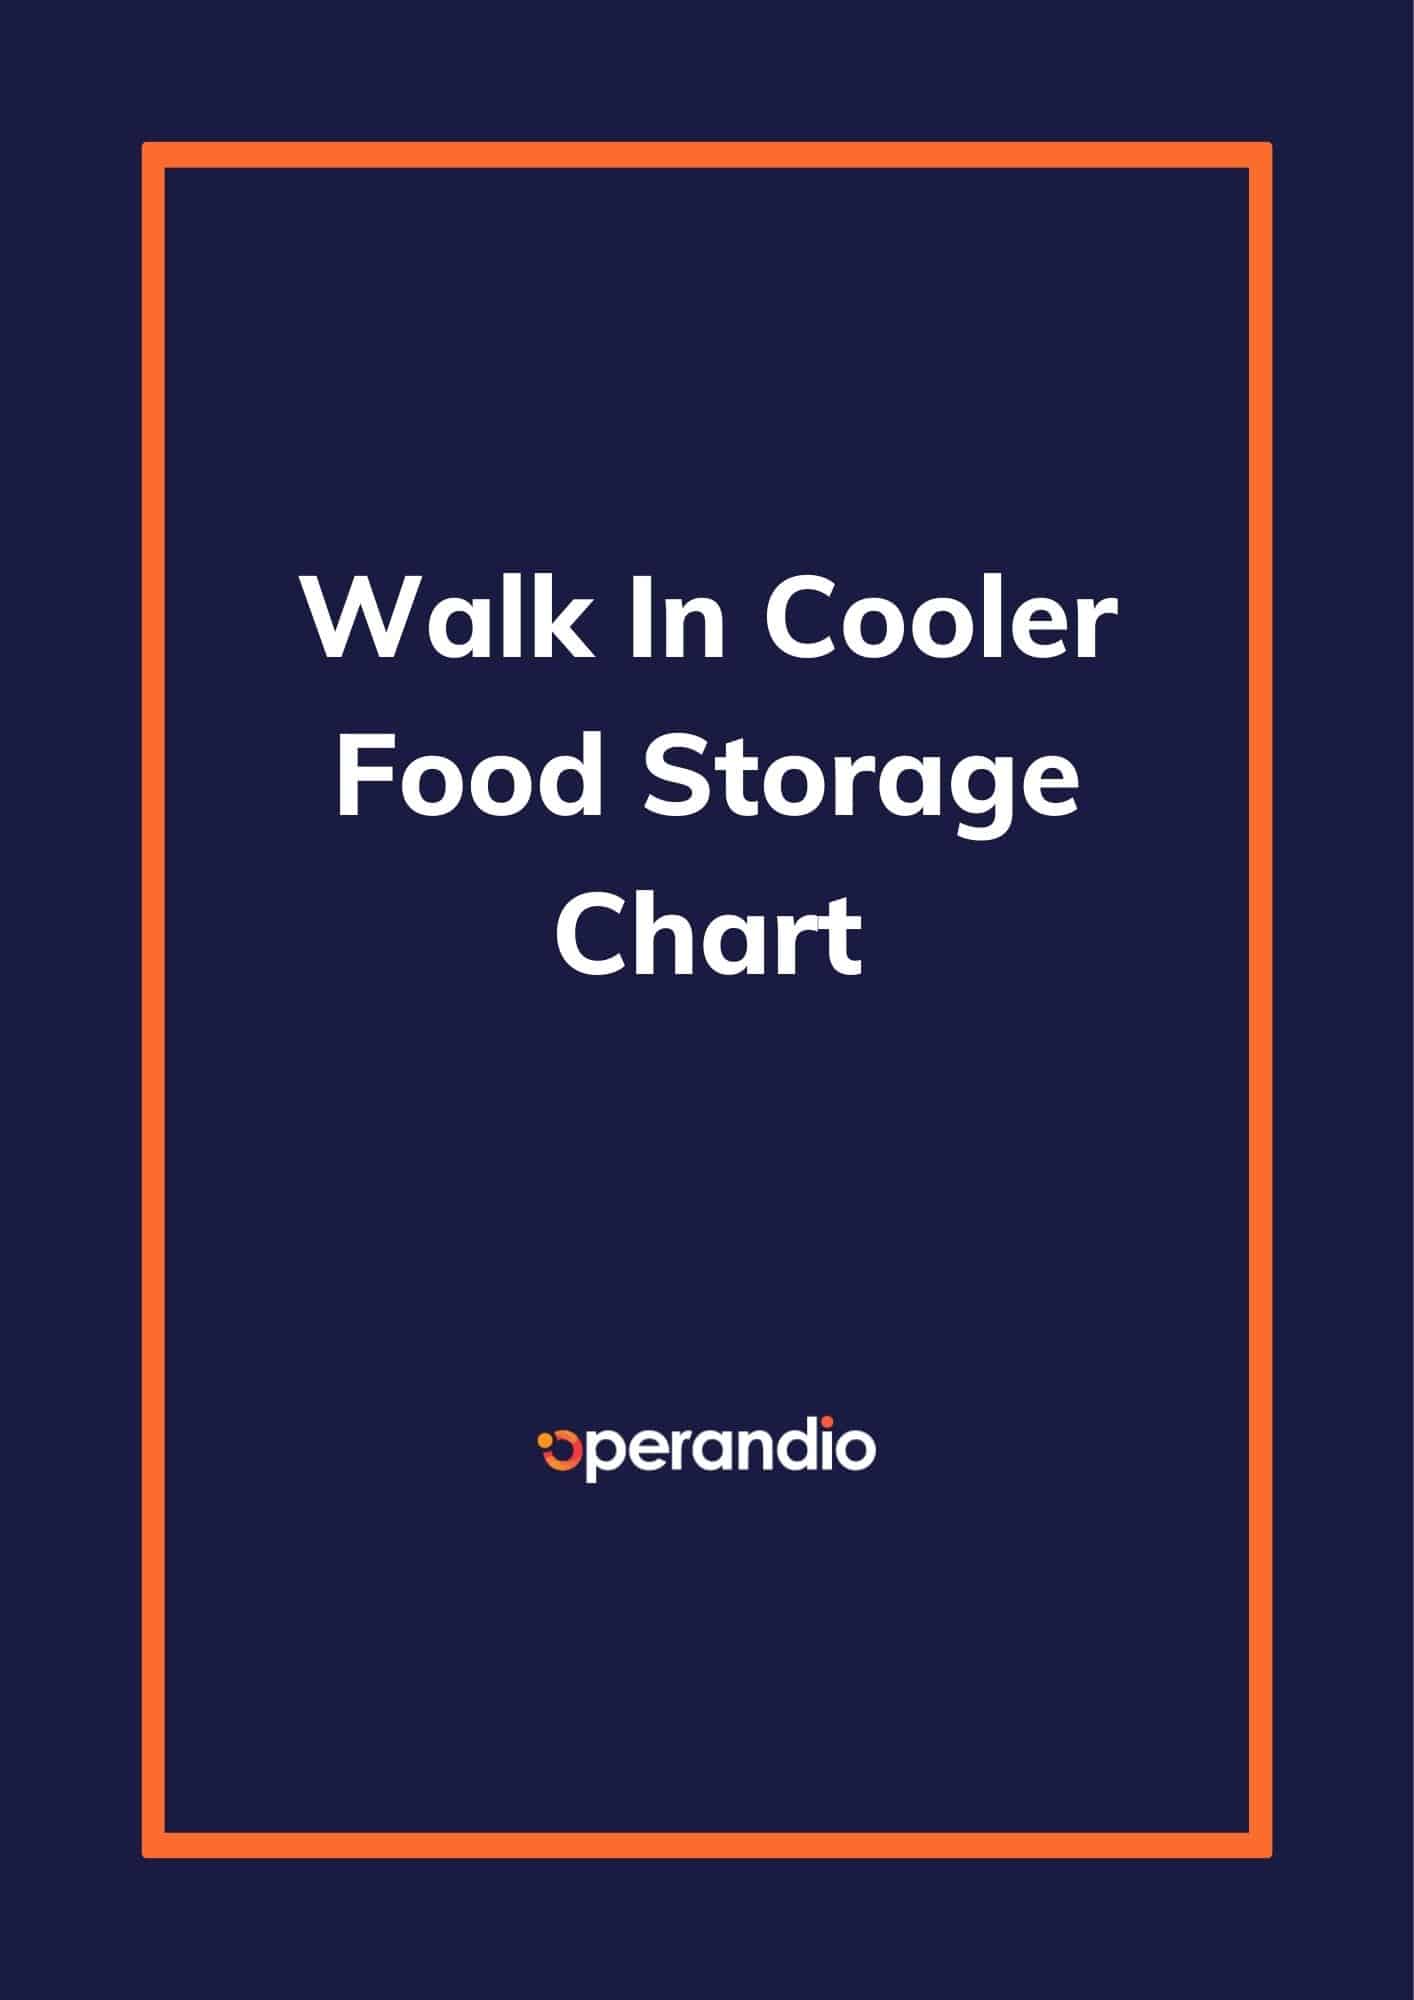 WalkIn Cooler Food Storage Chart A comprehensive guide